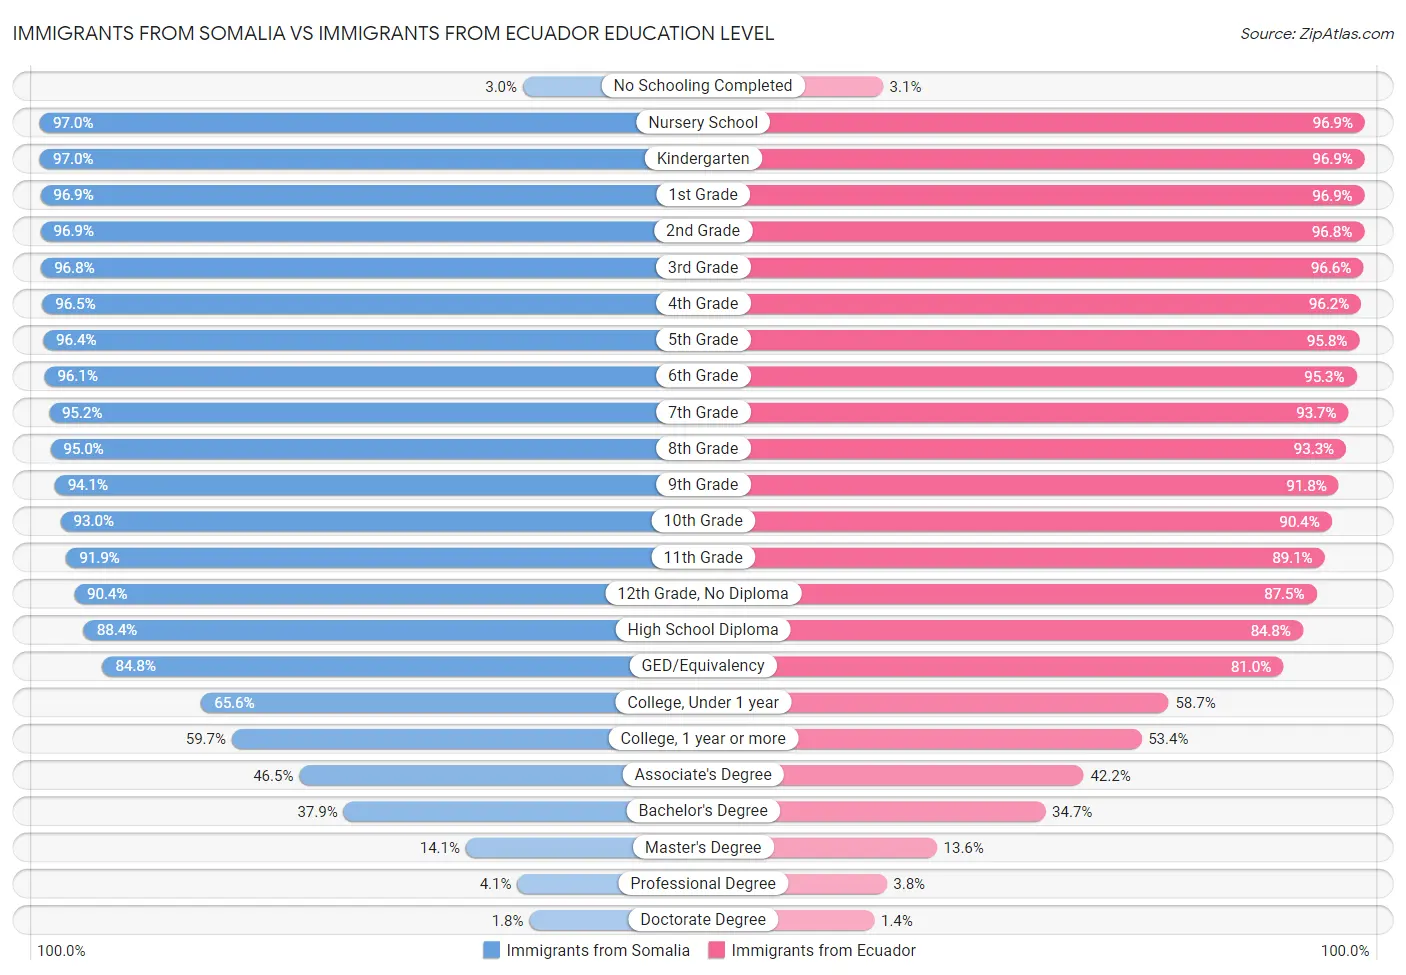 Immigrants from Somalia vs Immigrants from Ecuador Education Level